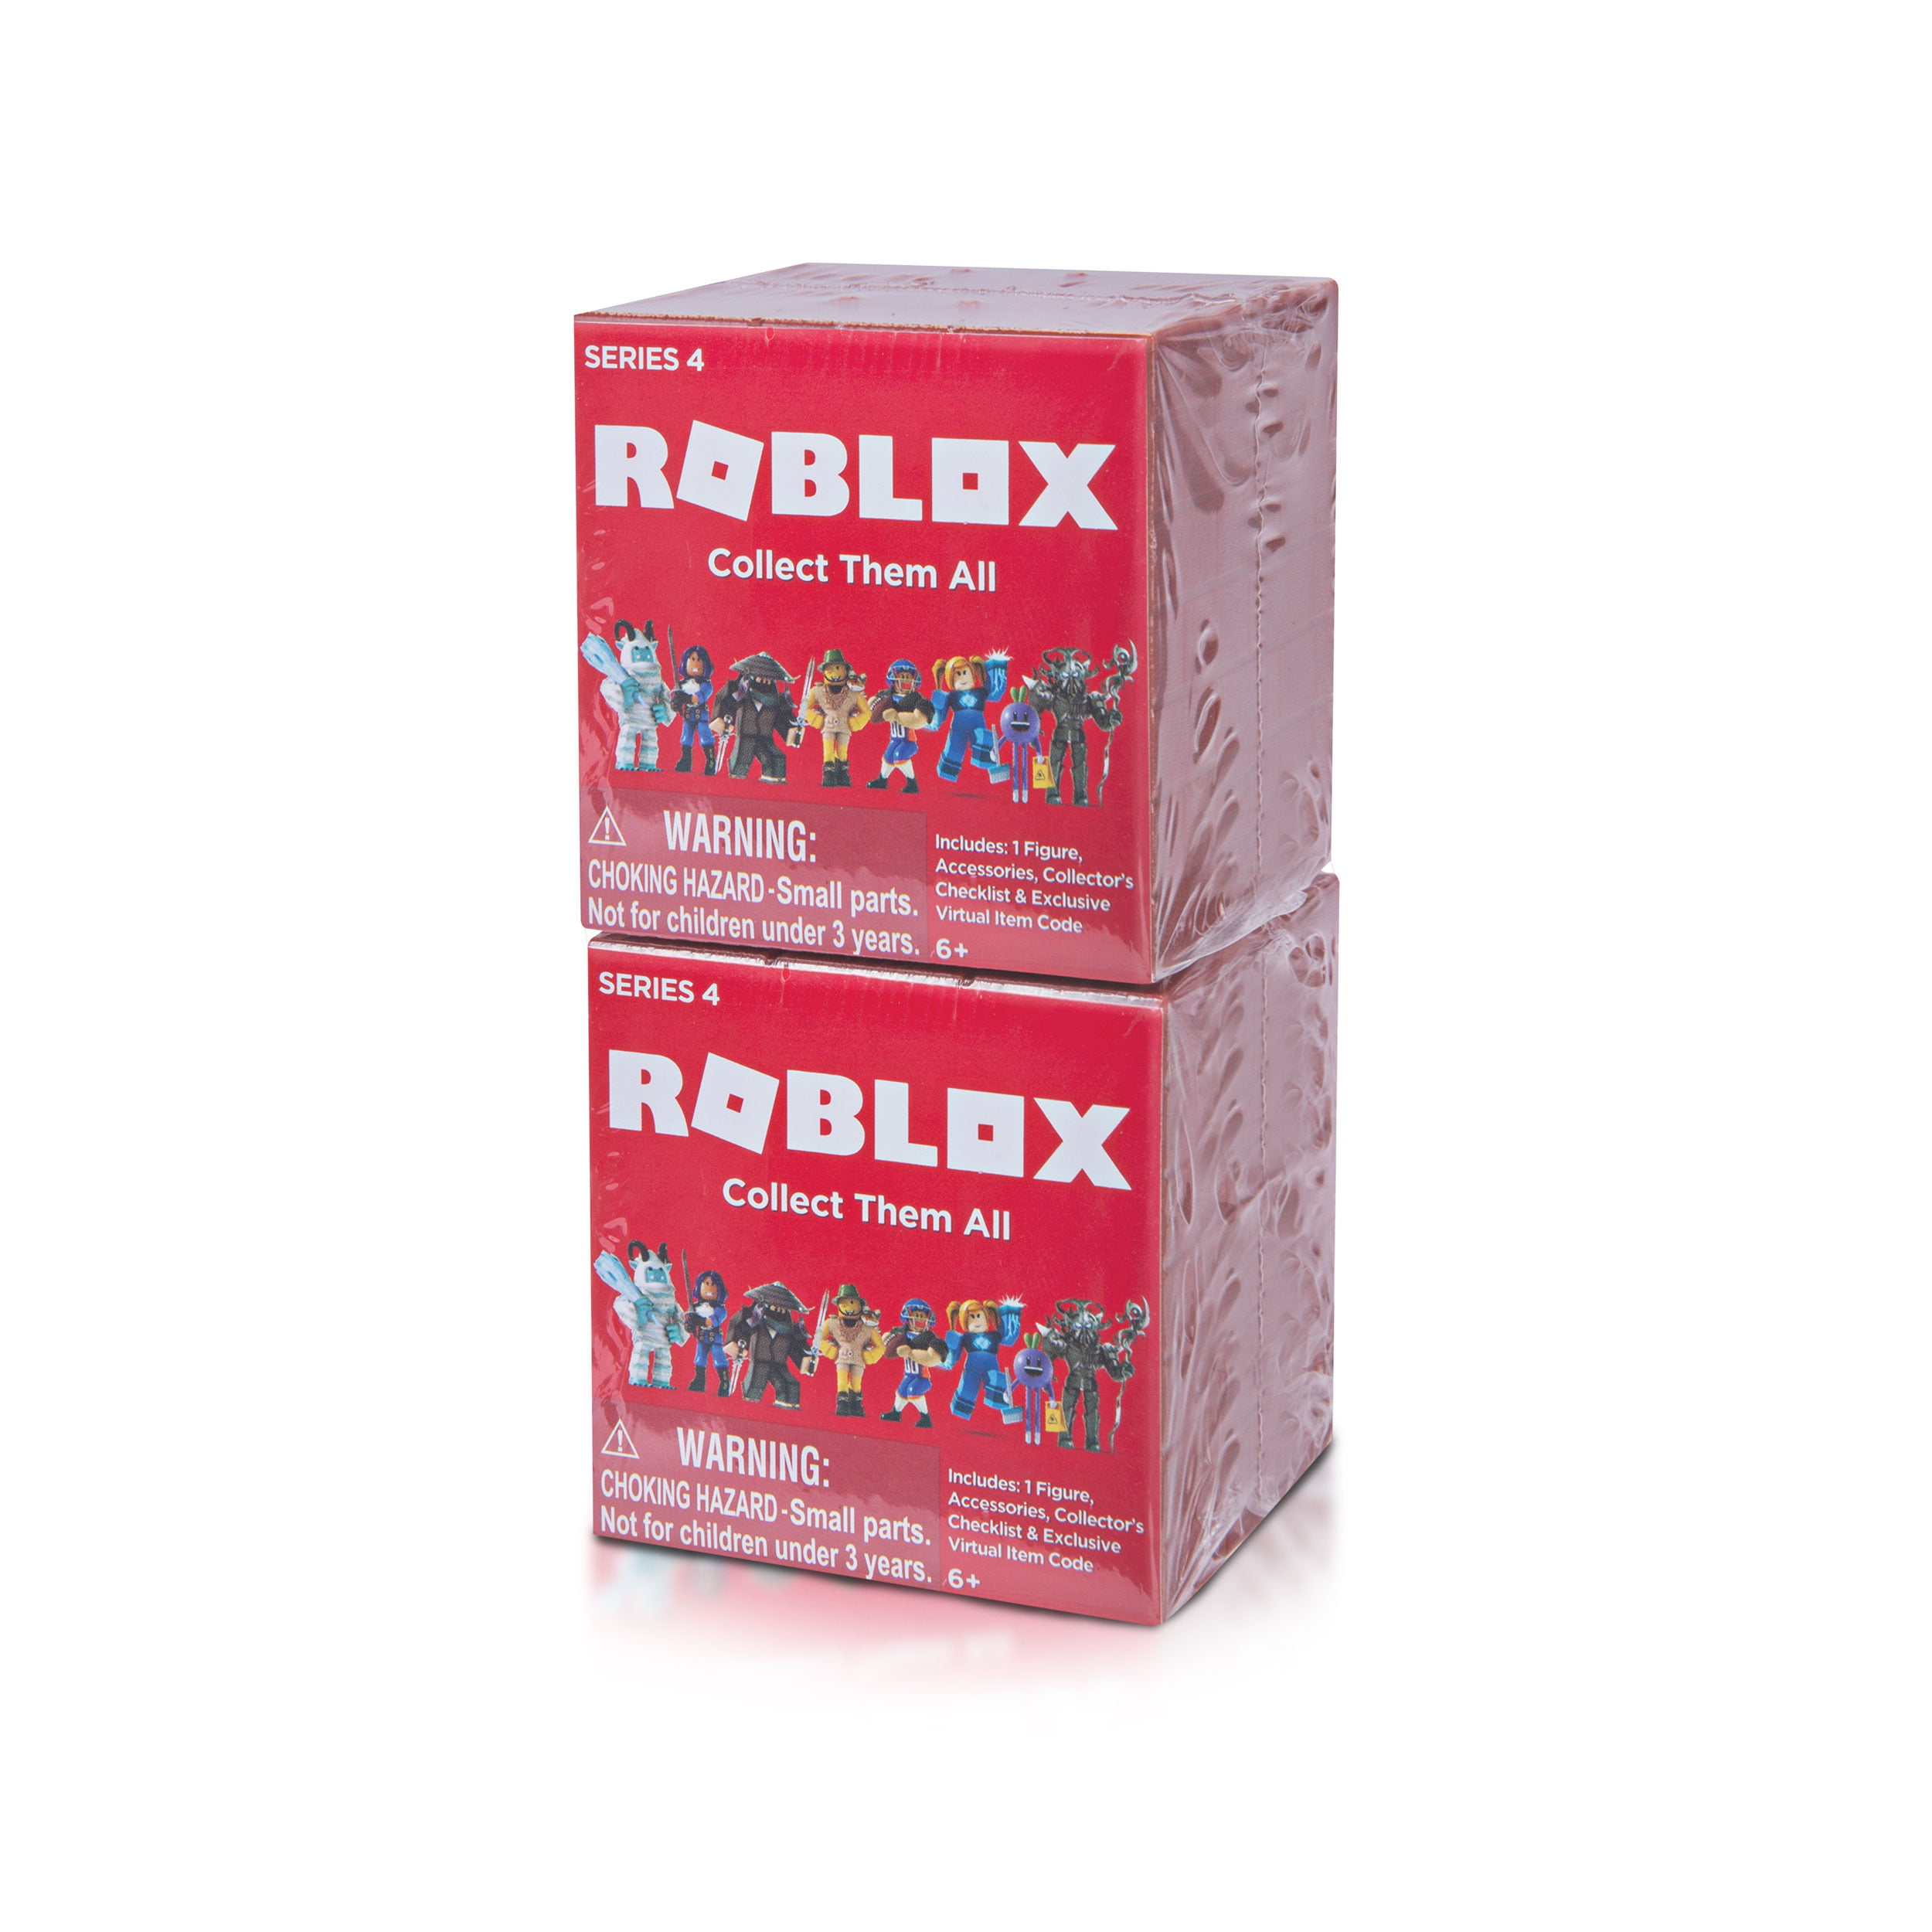 Roblox Series 1 2 3 4 Mystery Red Box Figures Kids Toys Packs Virtual Game - free cardboard greatsword virtual item roblox action series 4